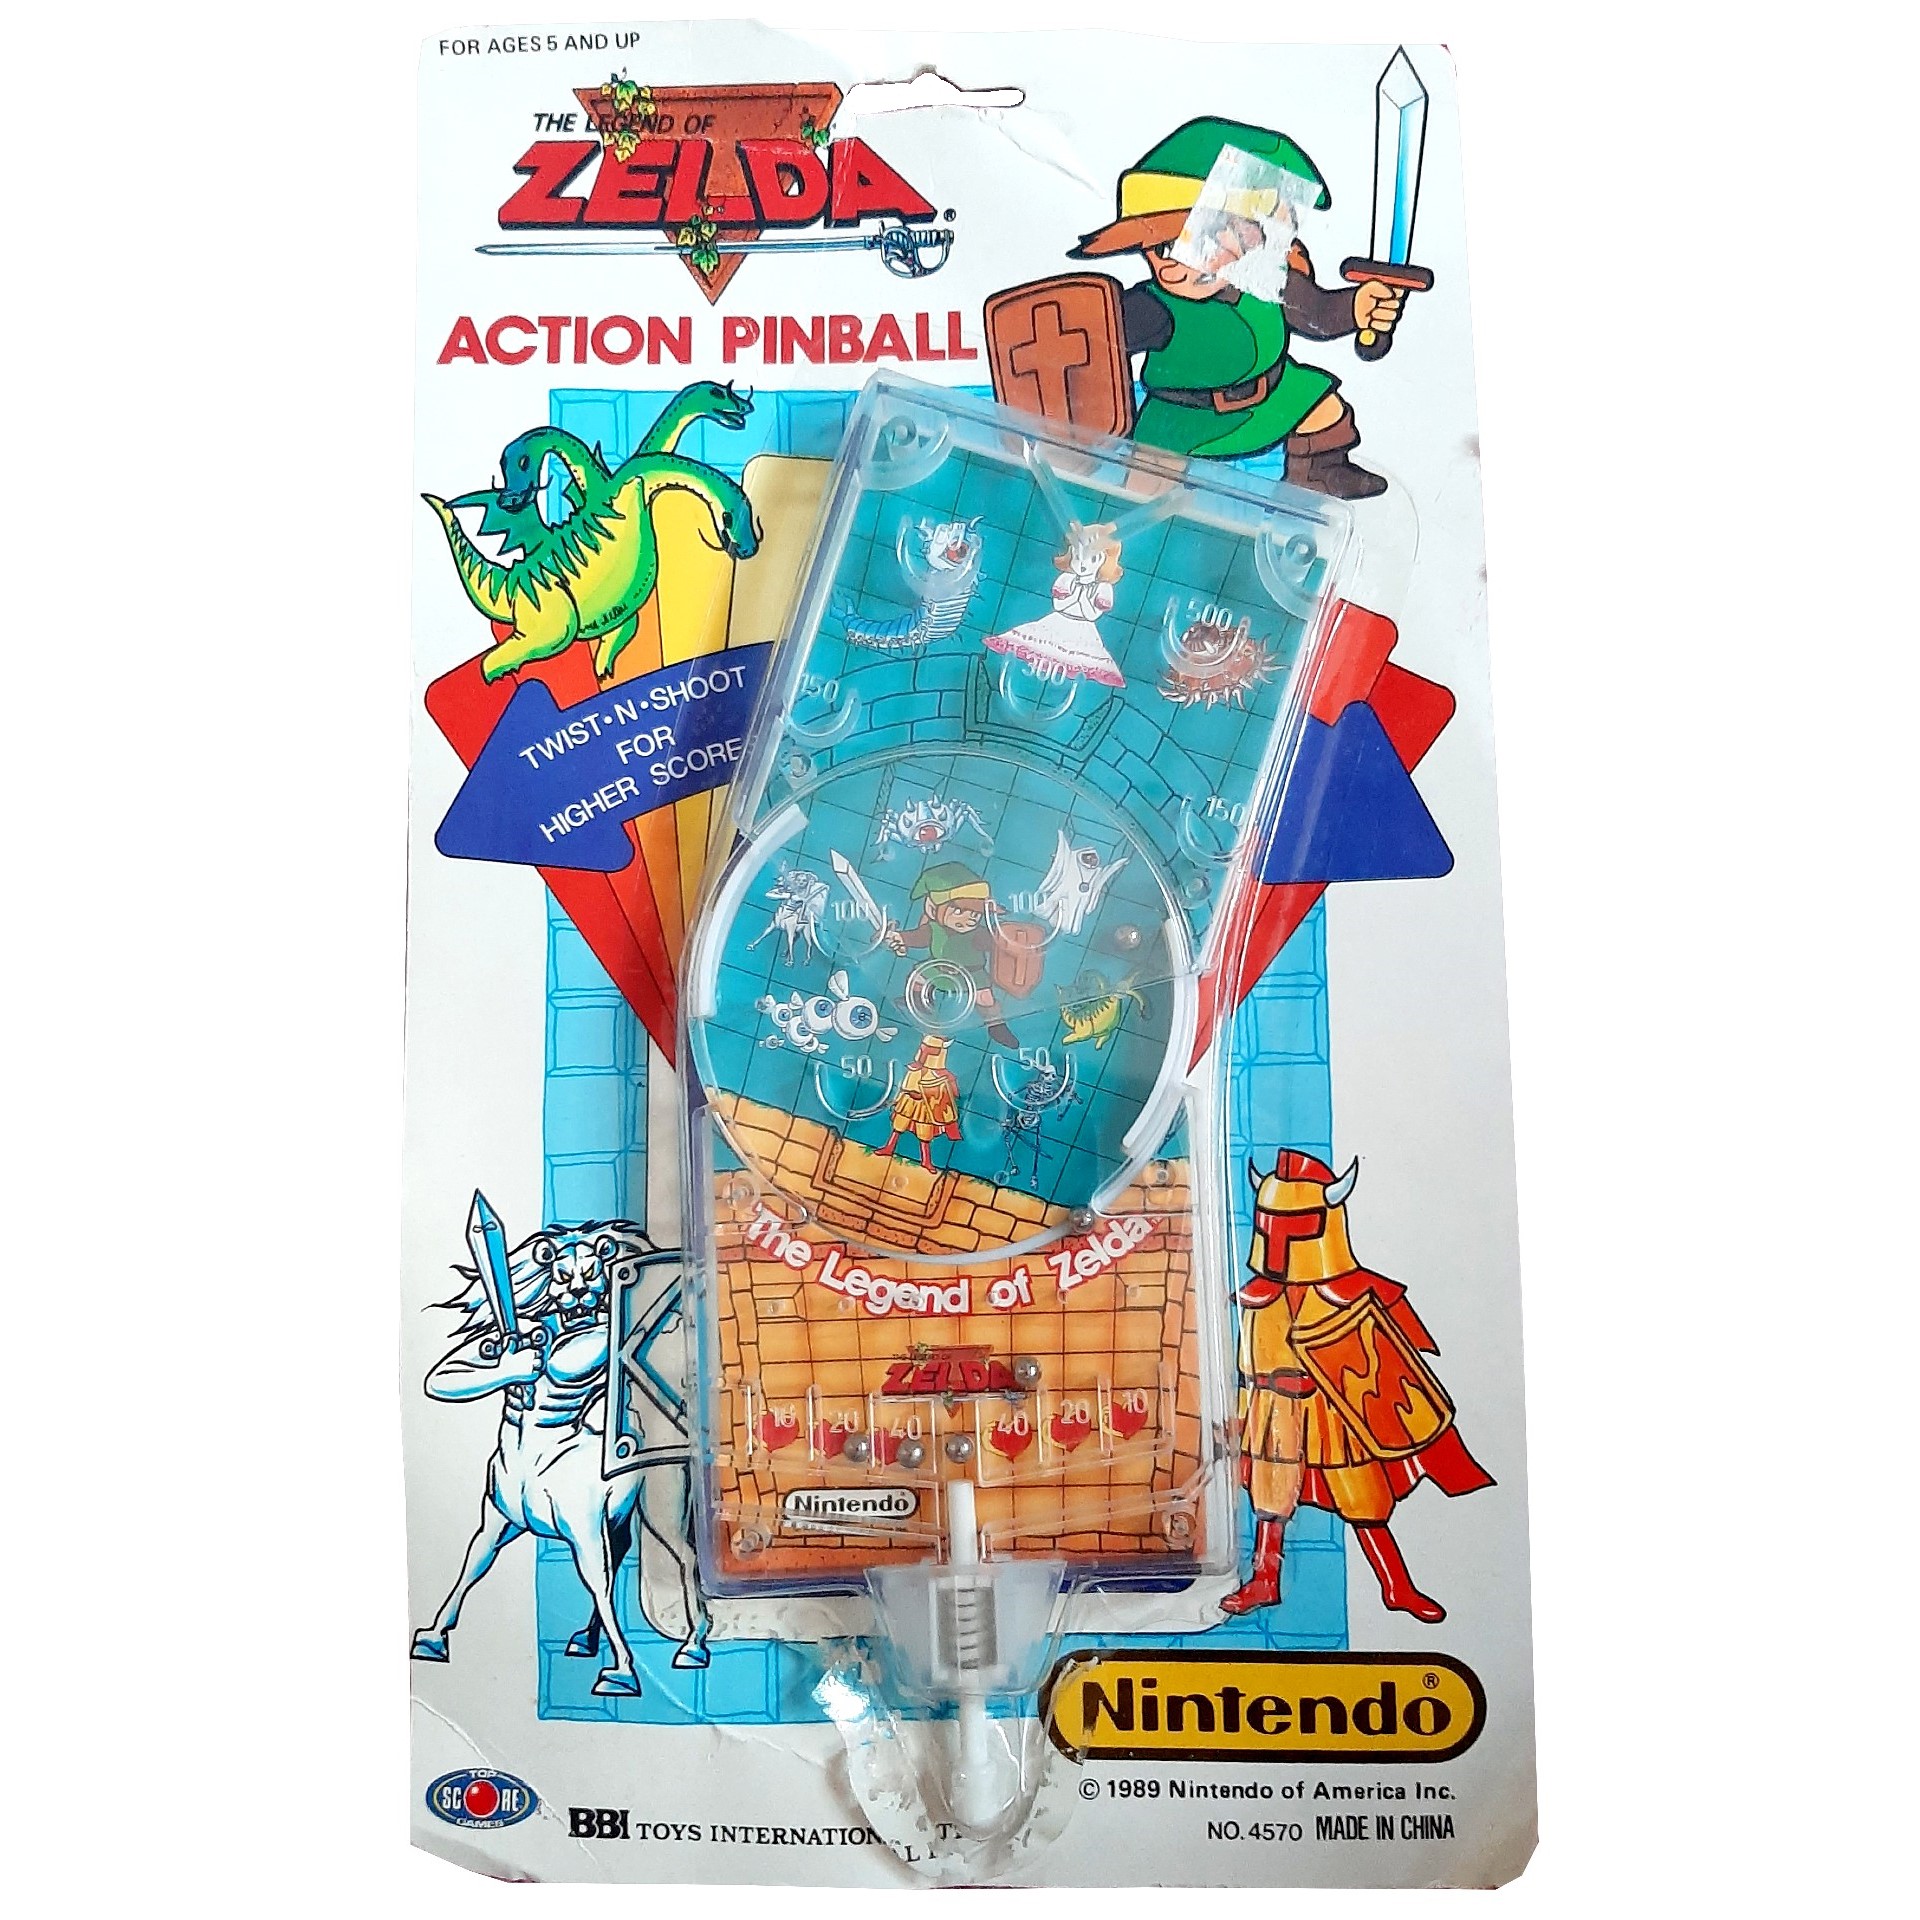 Action Pinball Toy by BBI Toys International, USA 1989.